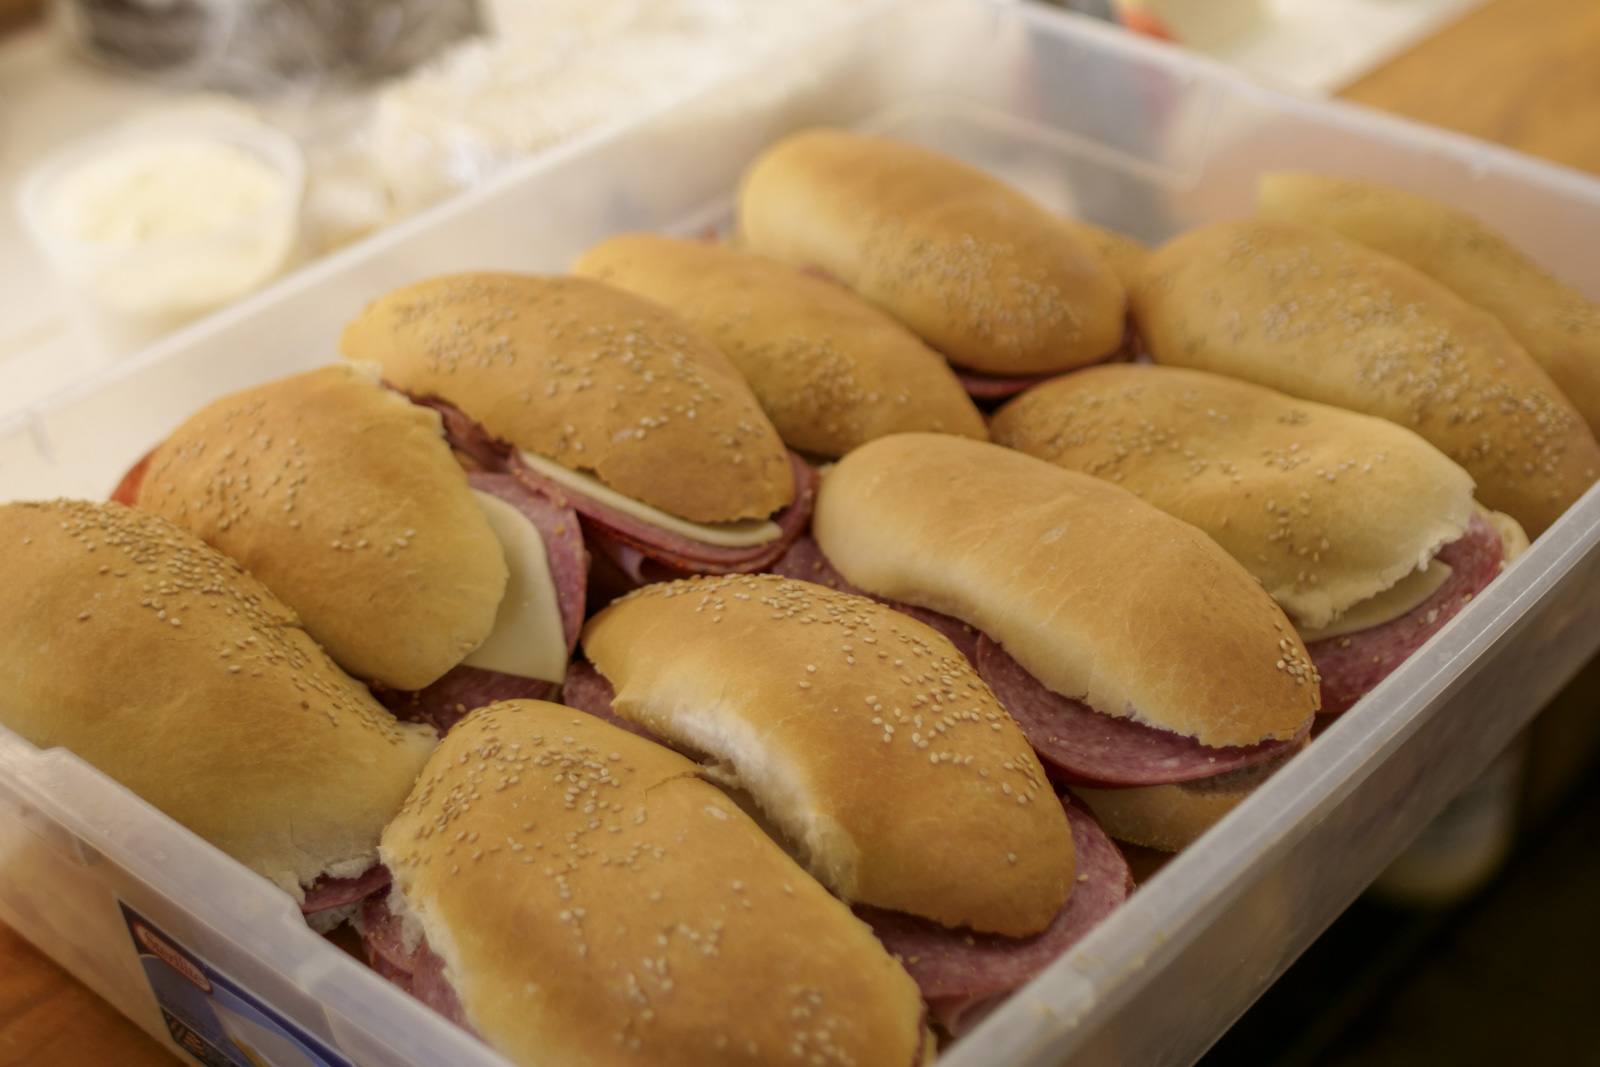 sub sandwiches on a tray